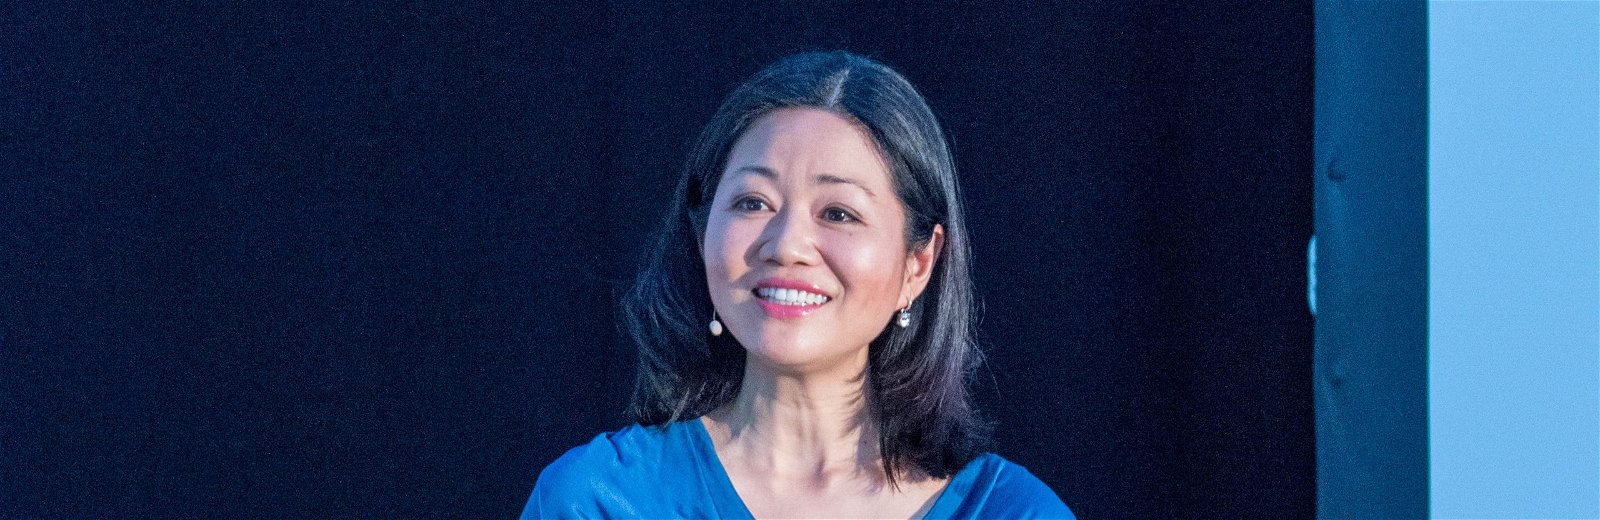 Linda Yueh speaking